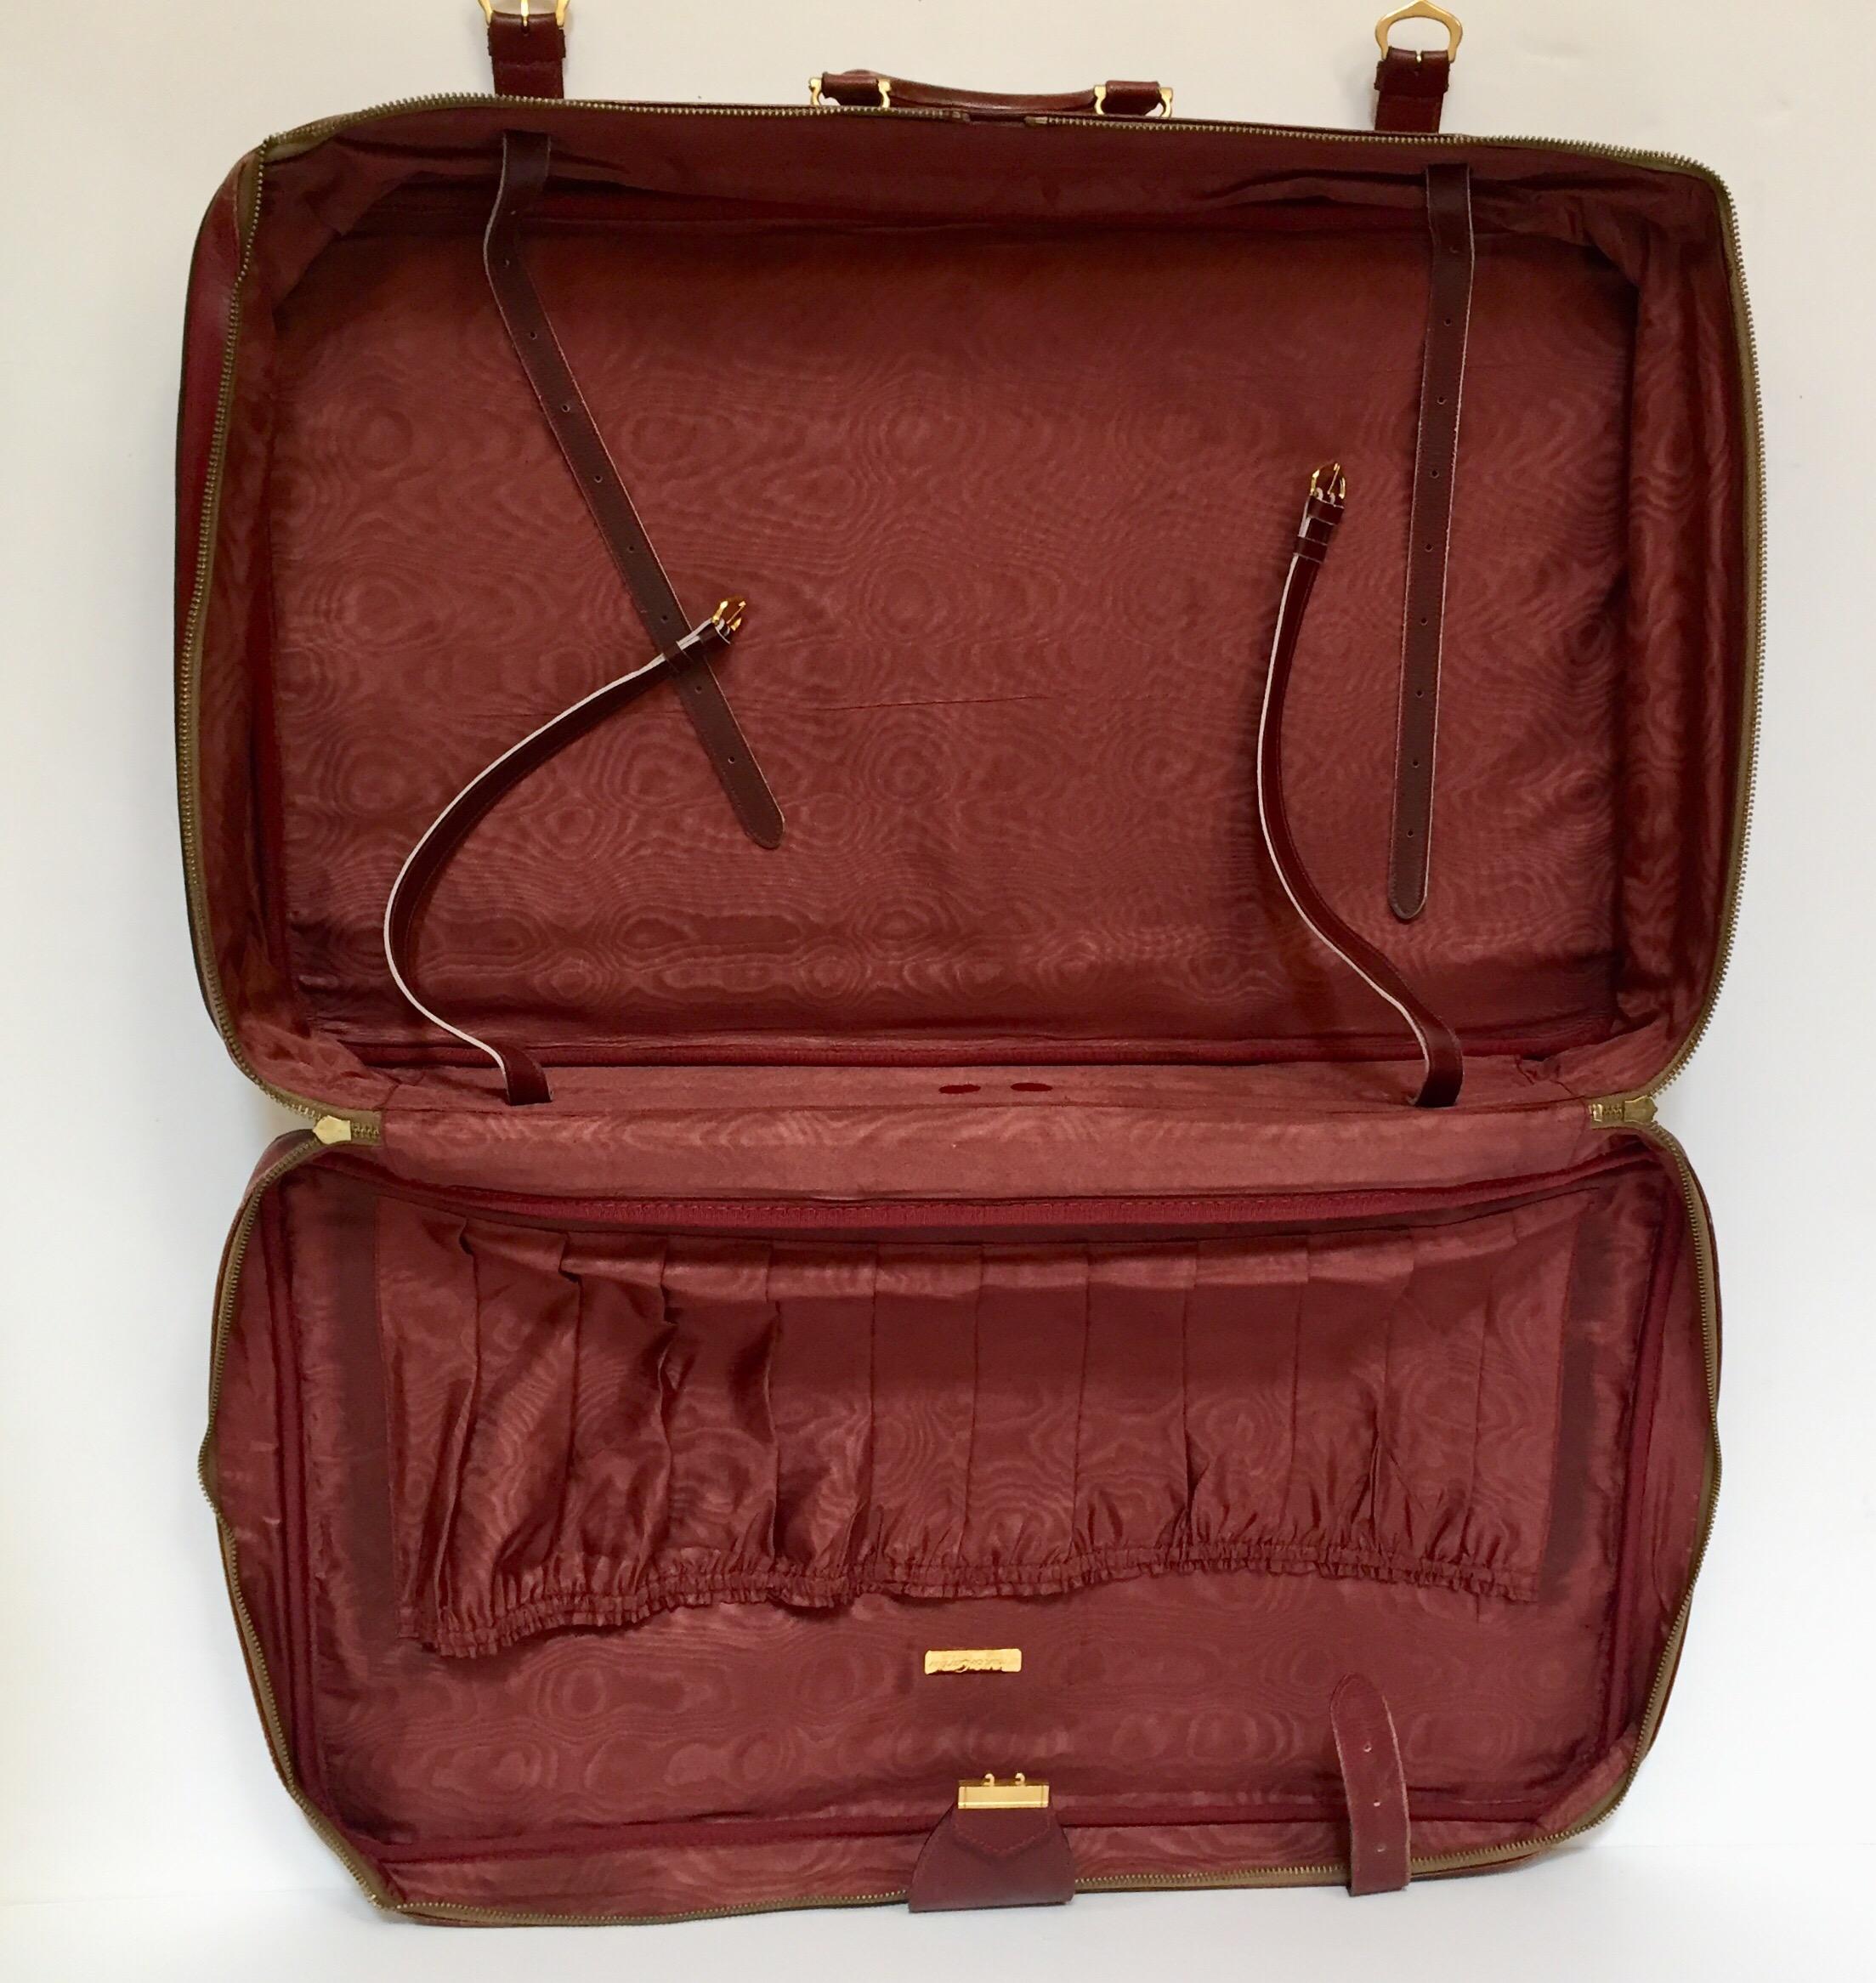 20th Century Vintage Leather Suitcase 